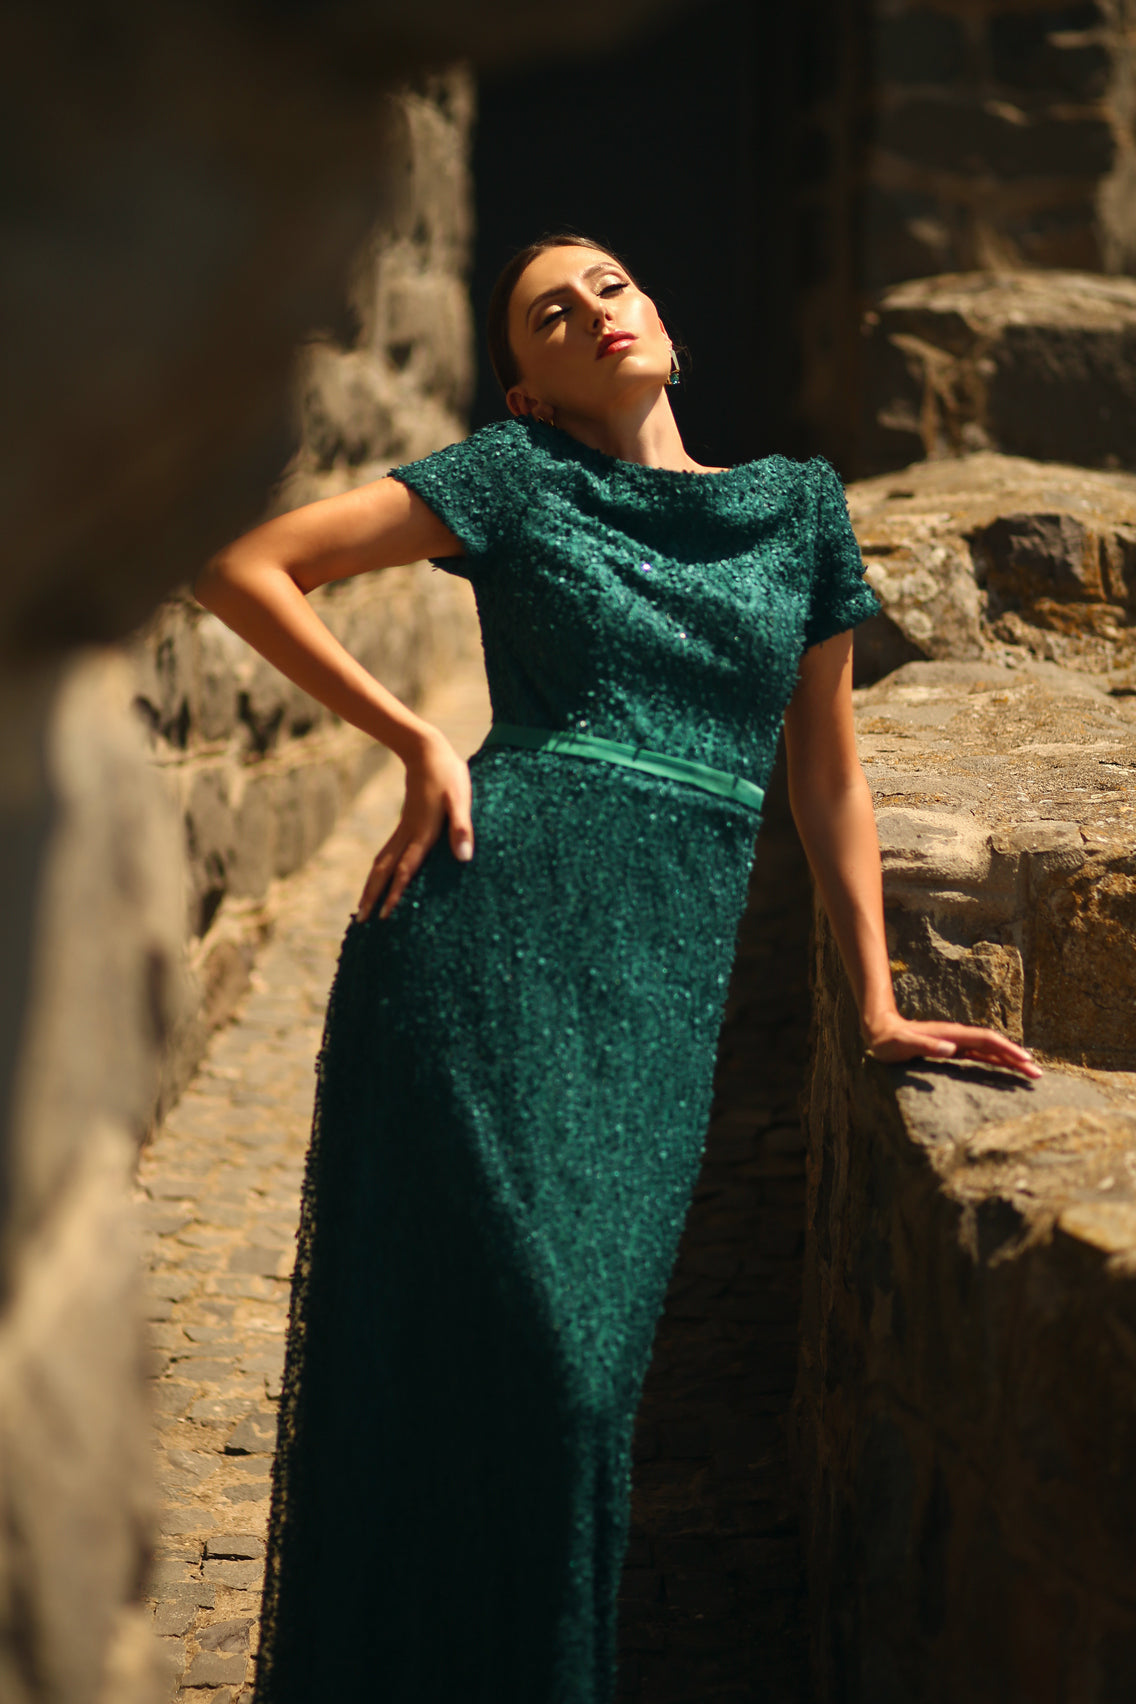 “Emerald” dress